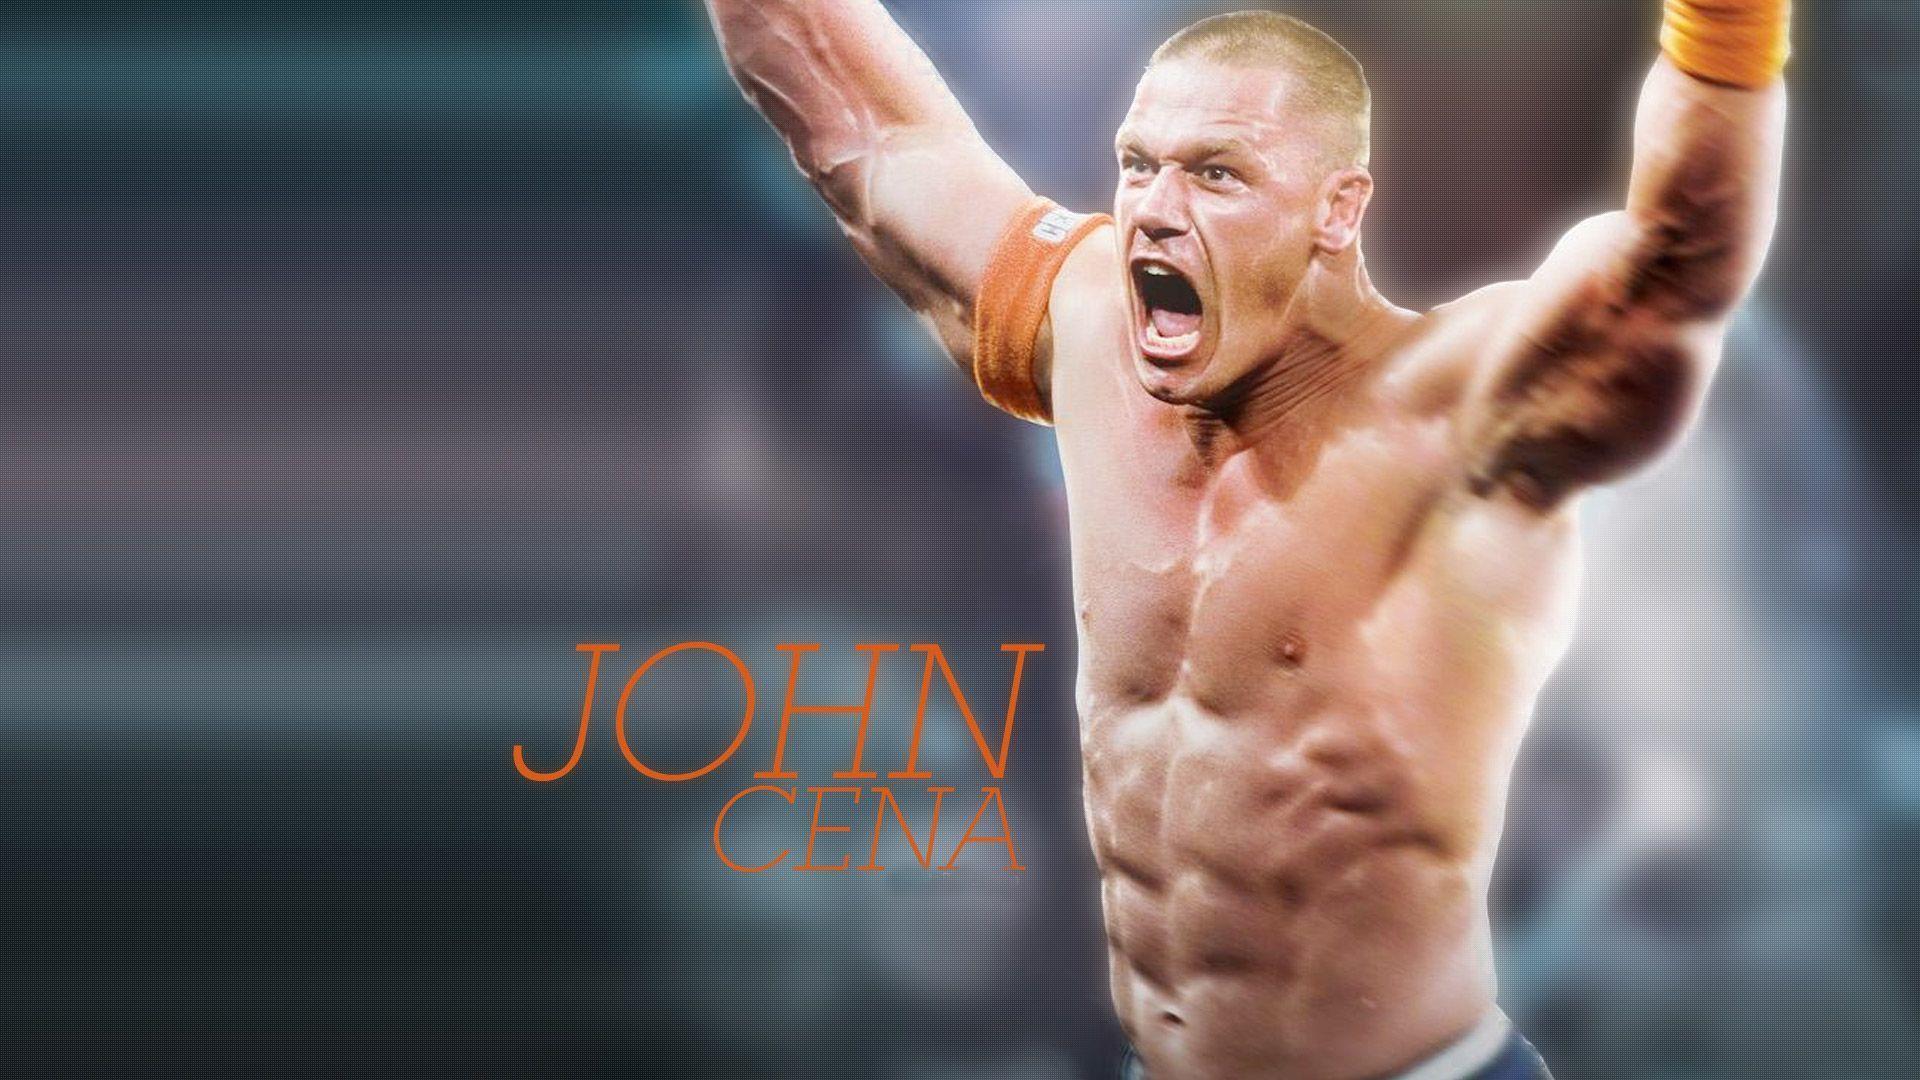 John Cena Widescreen Image 01. hdwallpaper